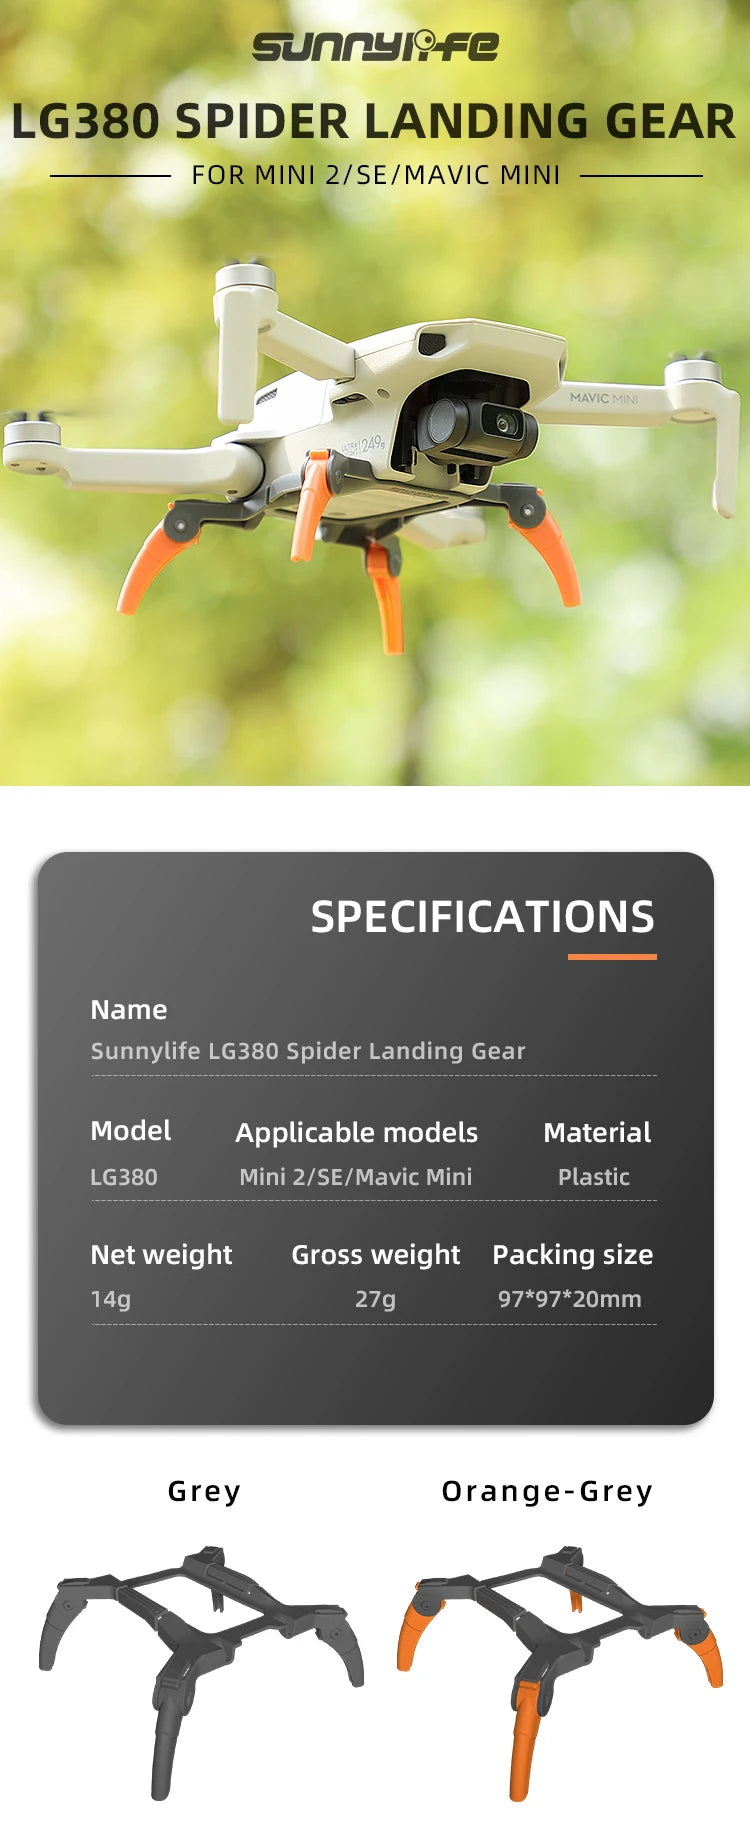 SUNYIO Fe LG380 SPIDER LANDING GEAR FOR MINI 2/